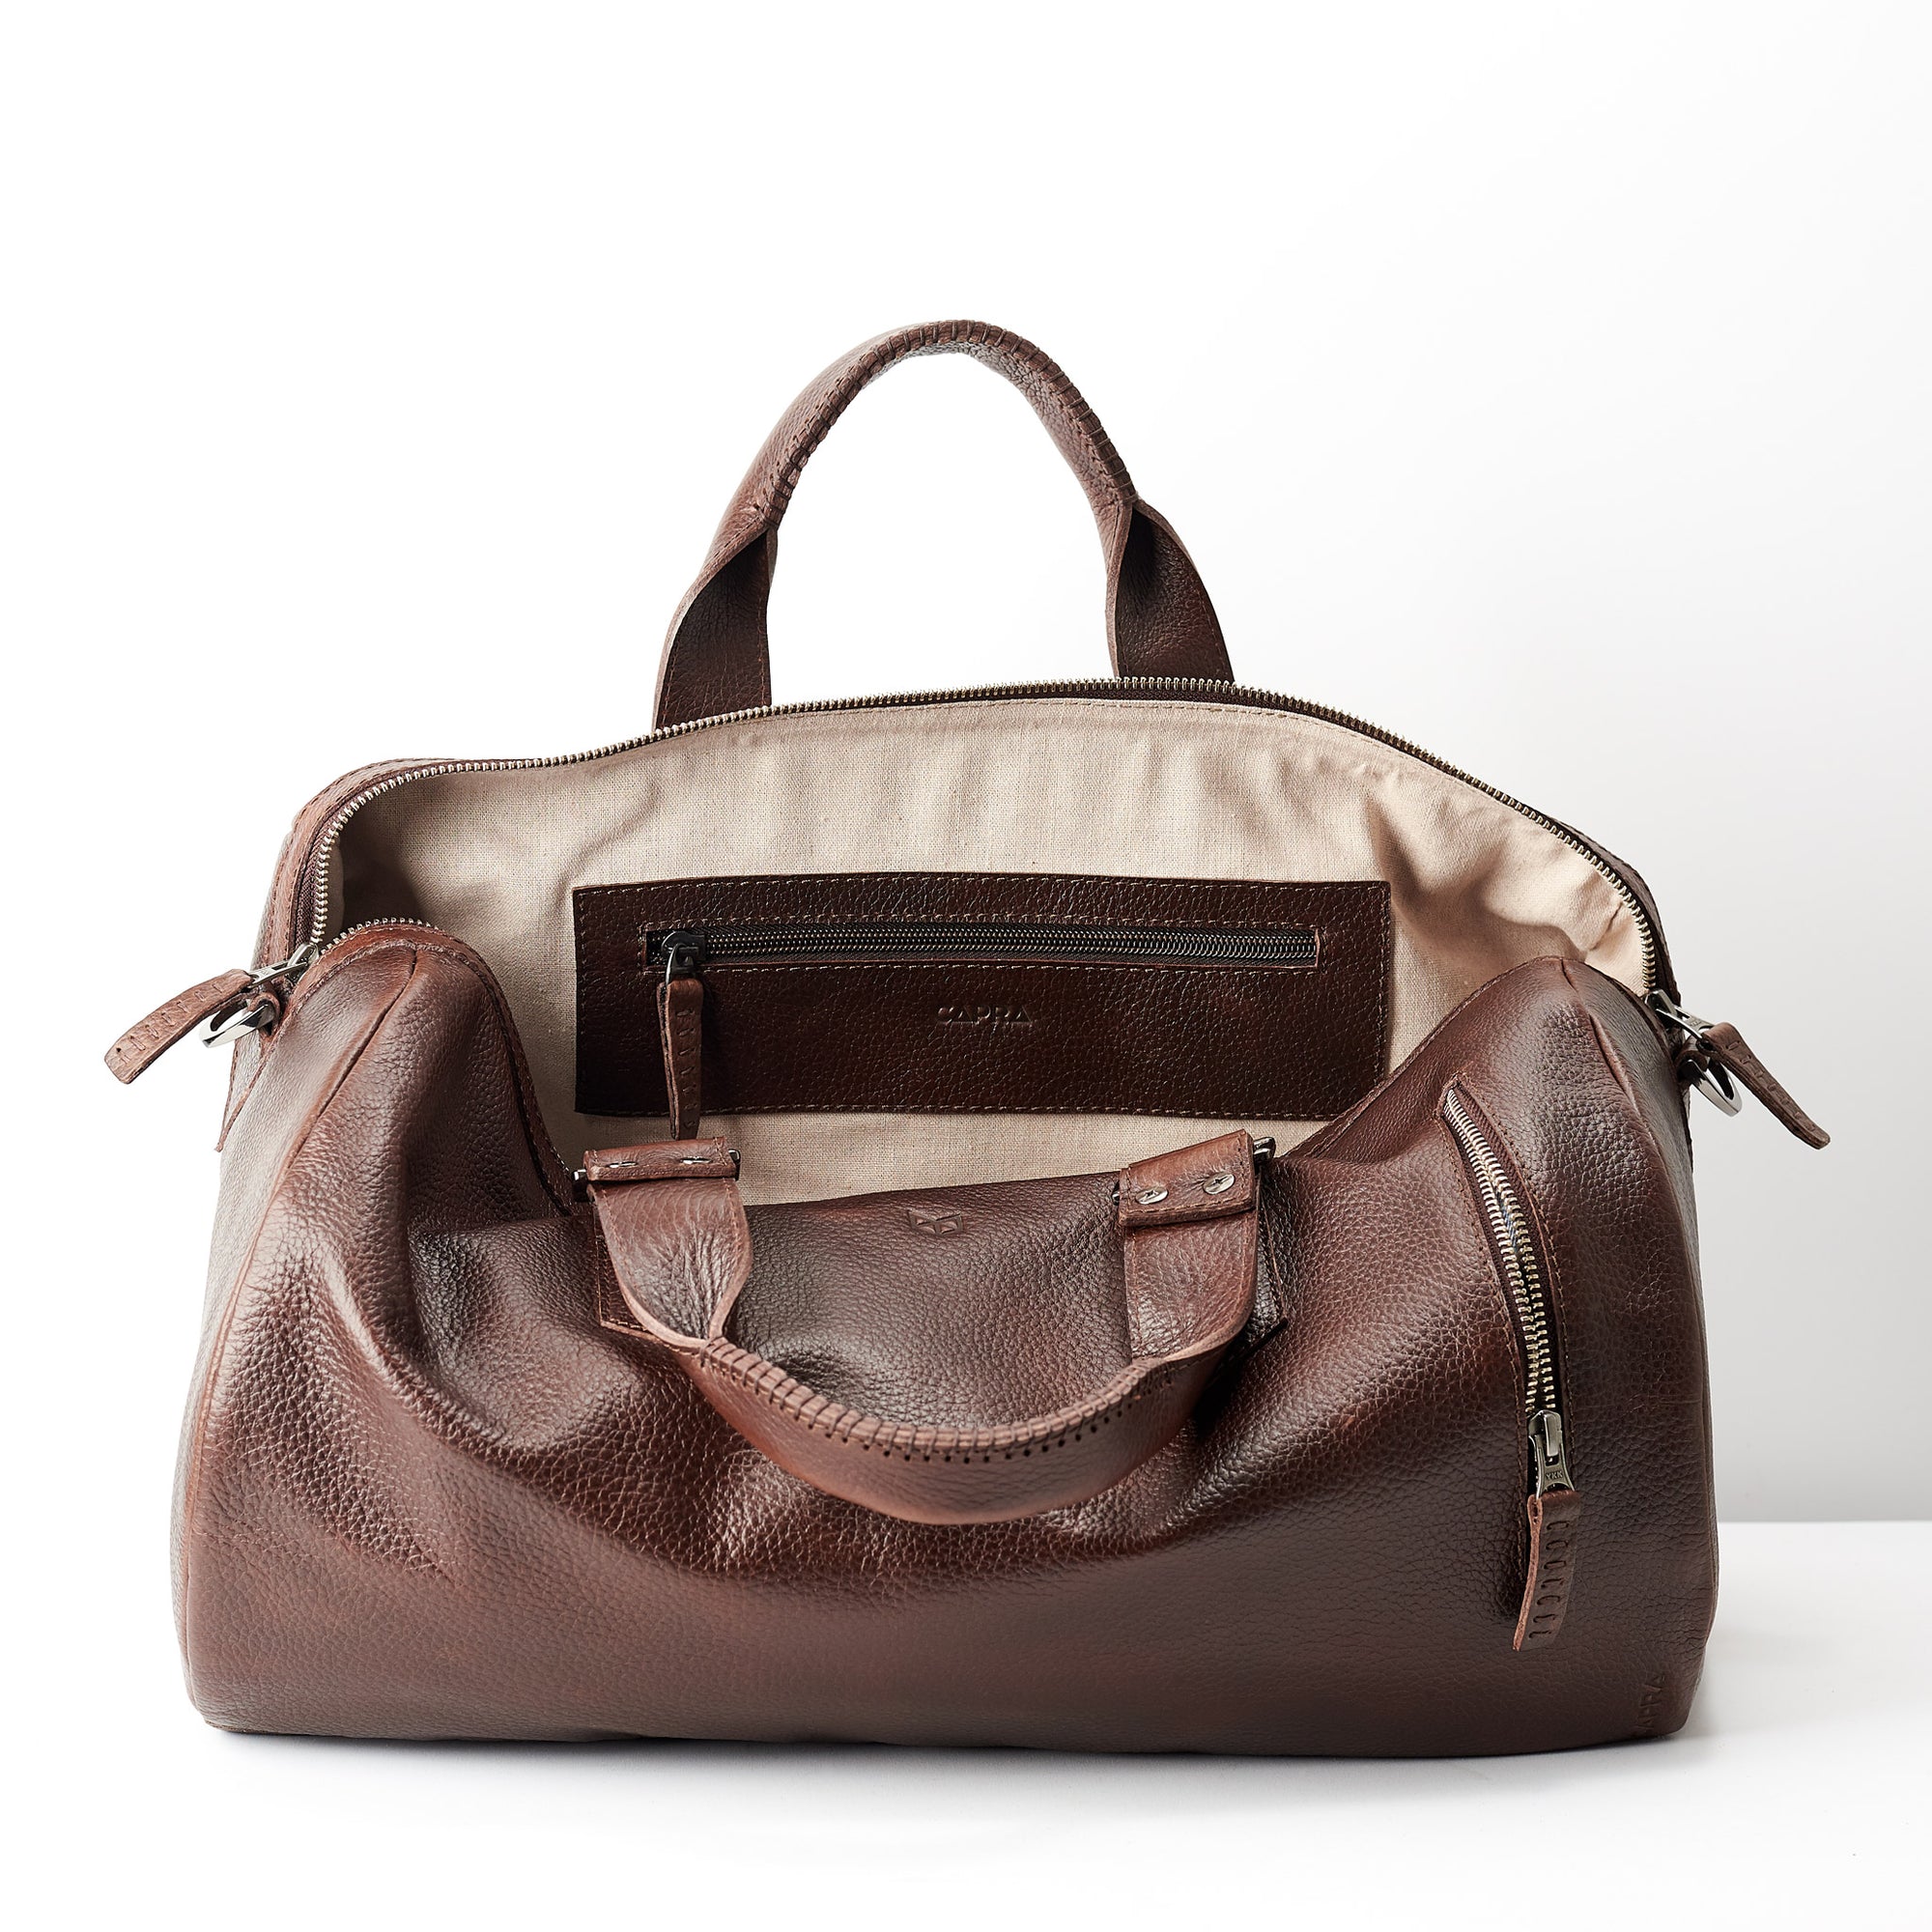 Linen interior. Dark brown leather handbag duffle bag for men